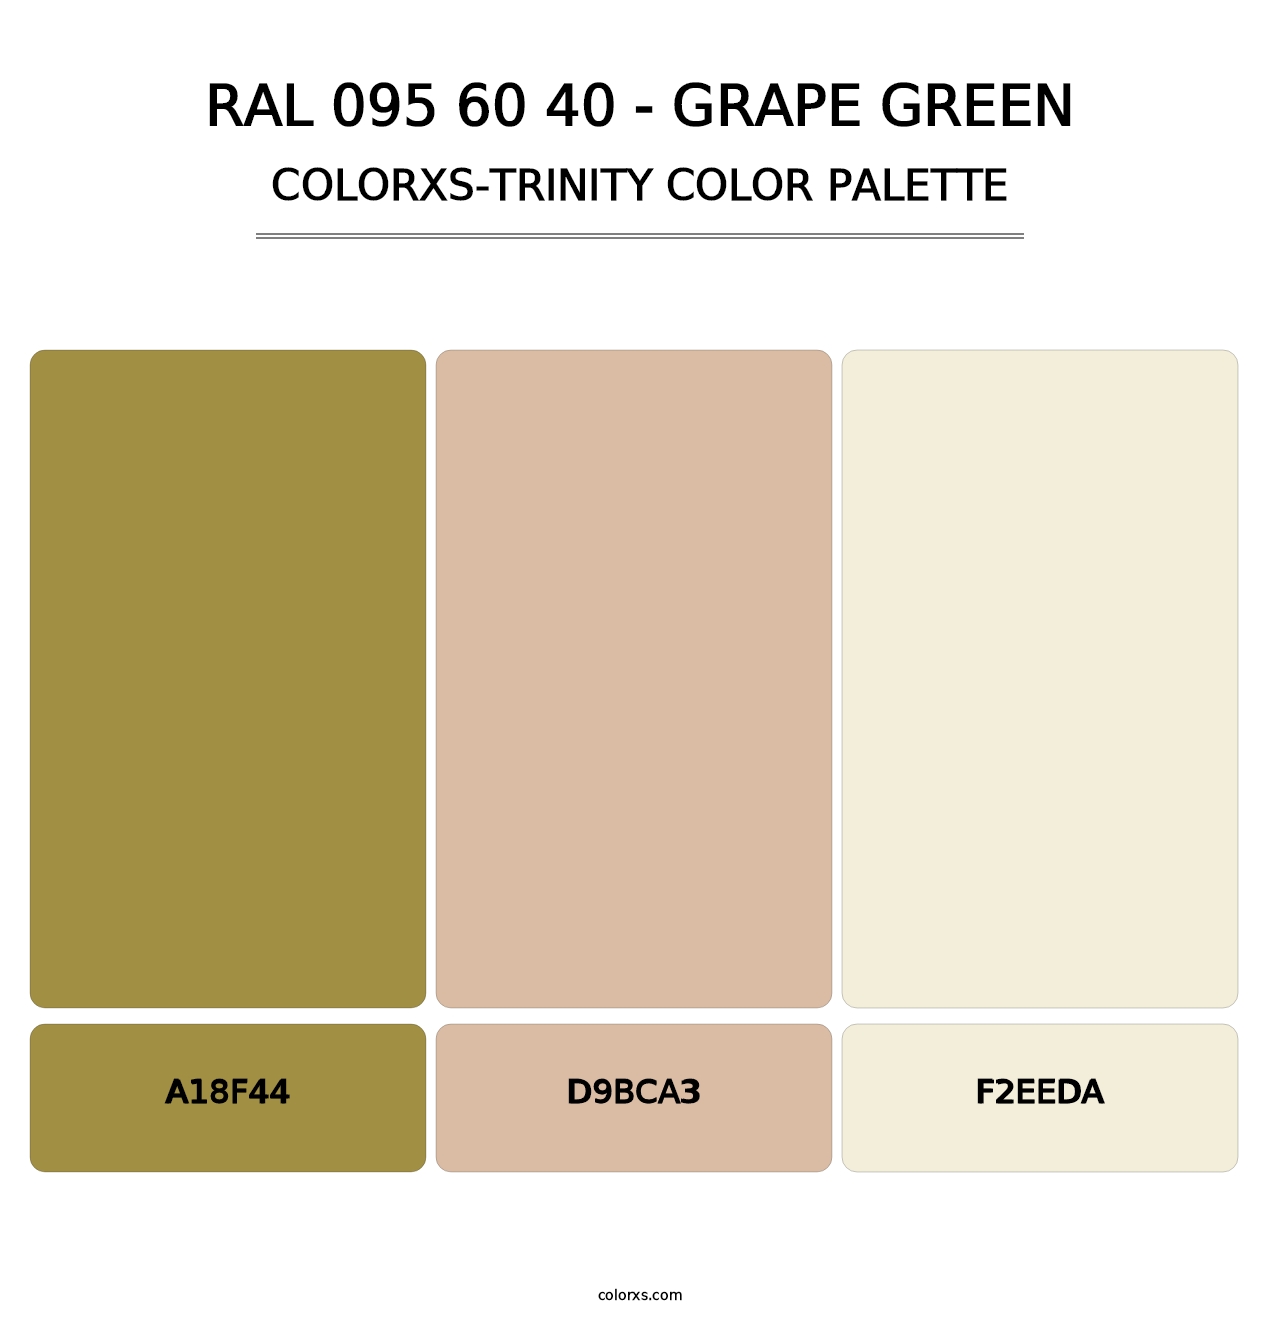 RAL 095 60 40 - Grape Green - Colorxs Trinity Palette